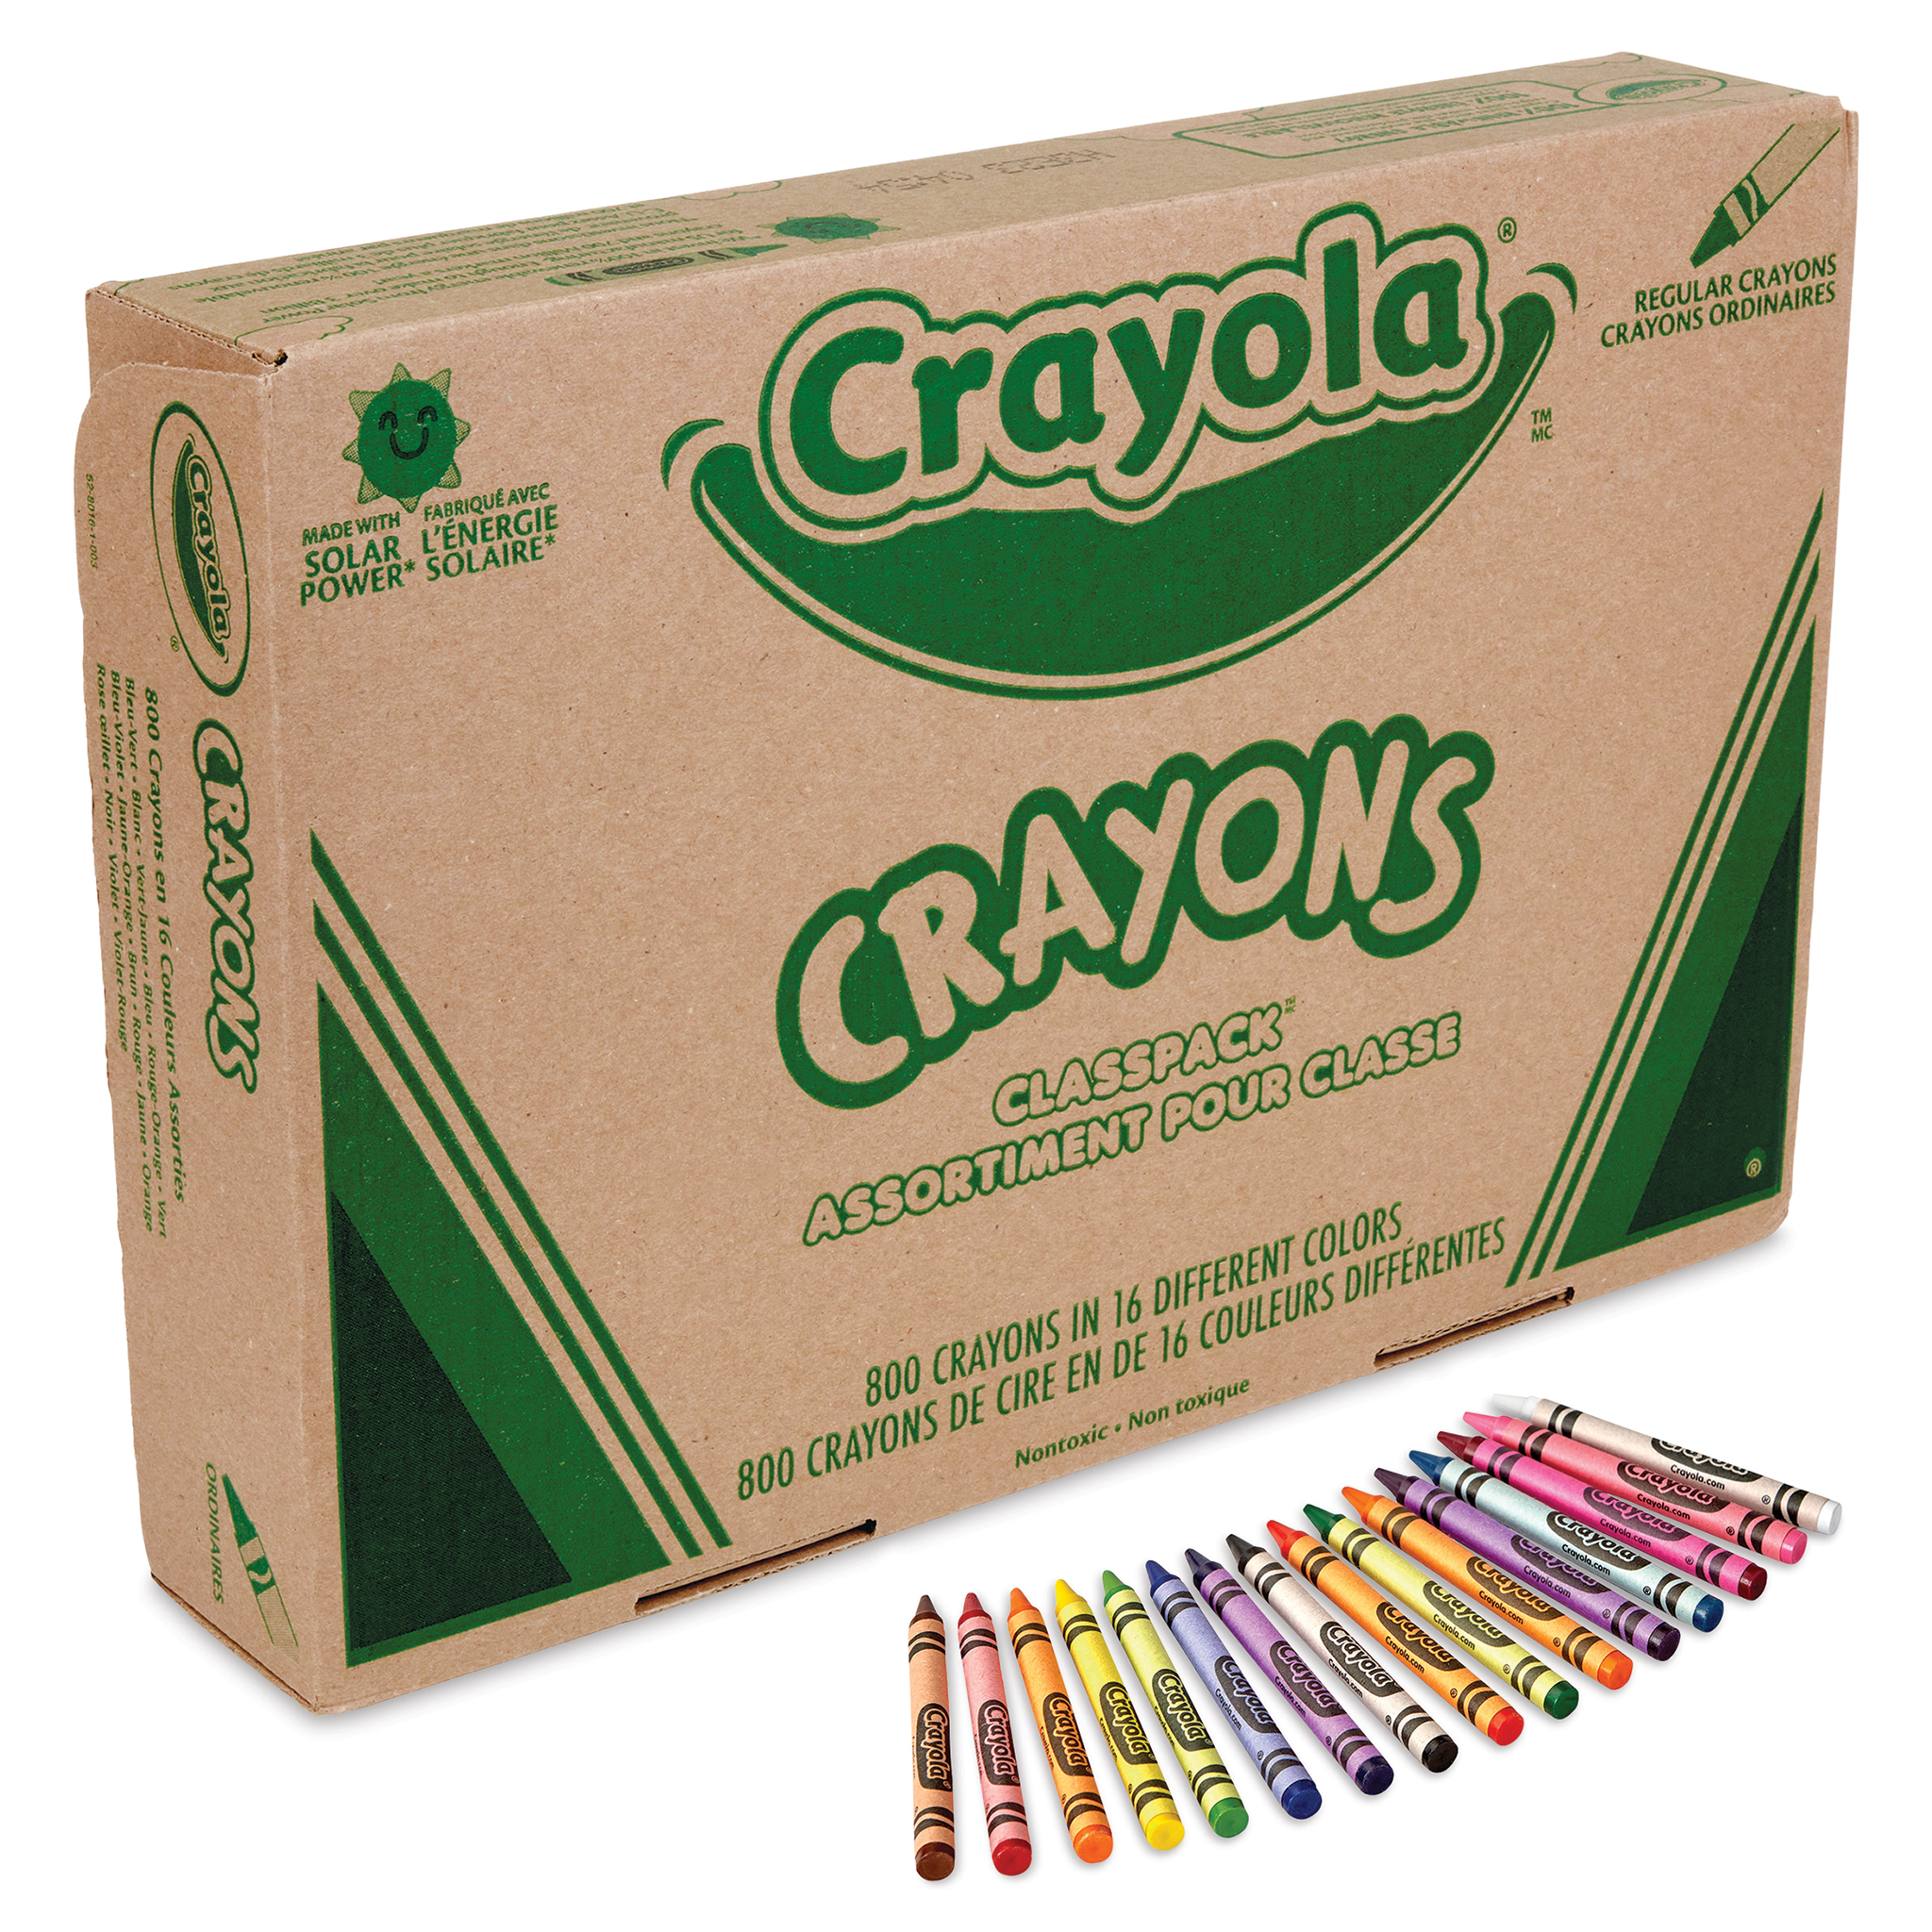  Crayola Crayon Classpack - 800ct (16 Assorted Colors